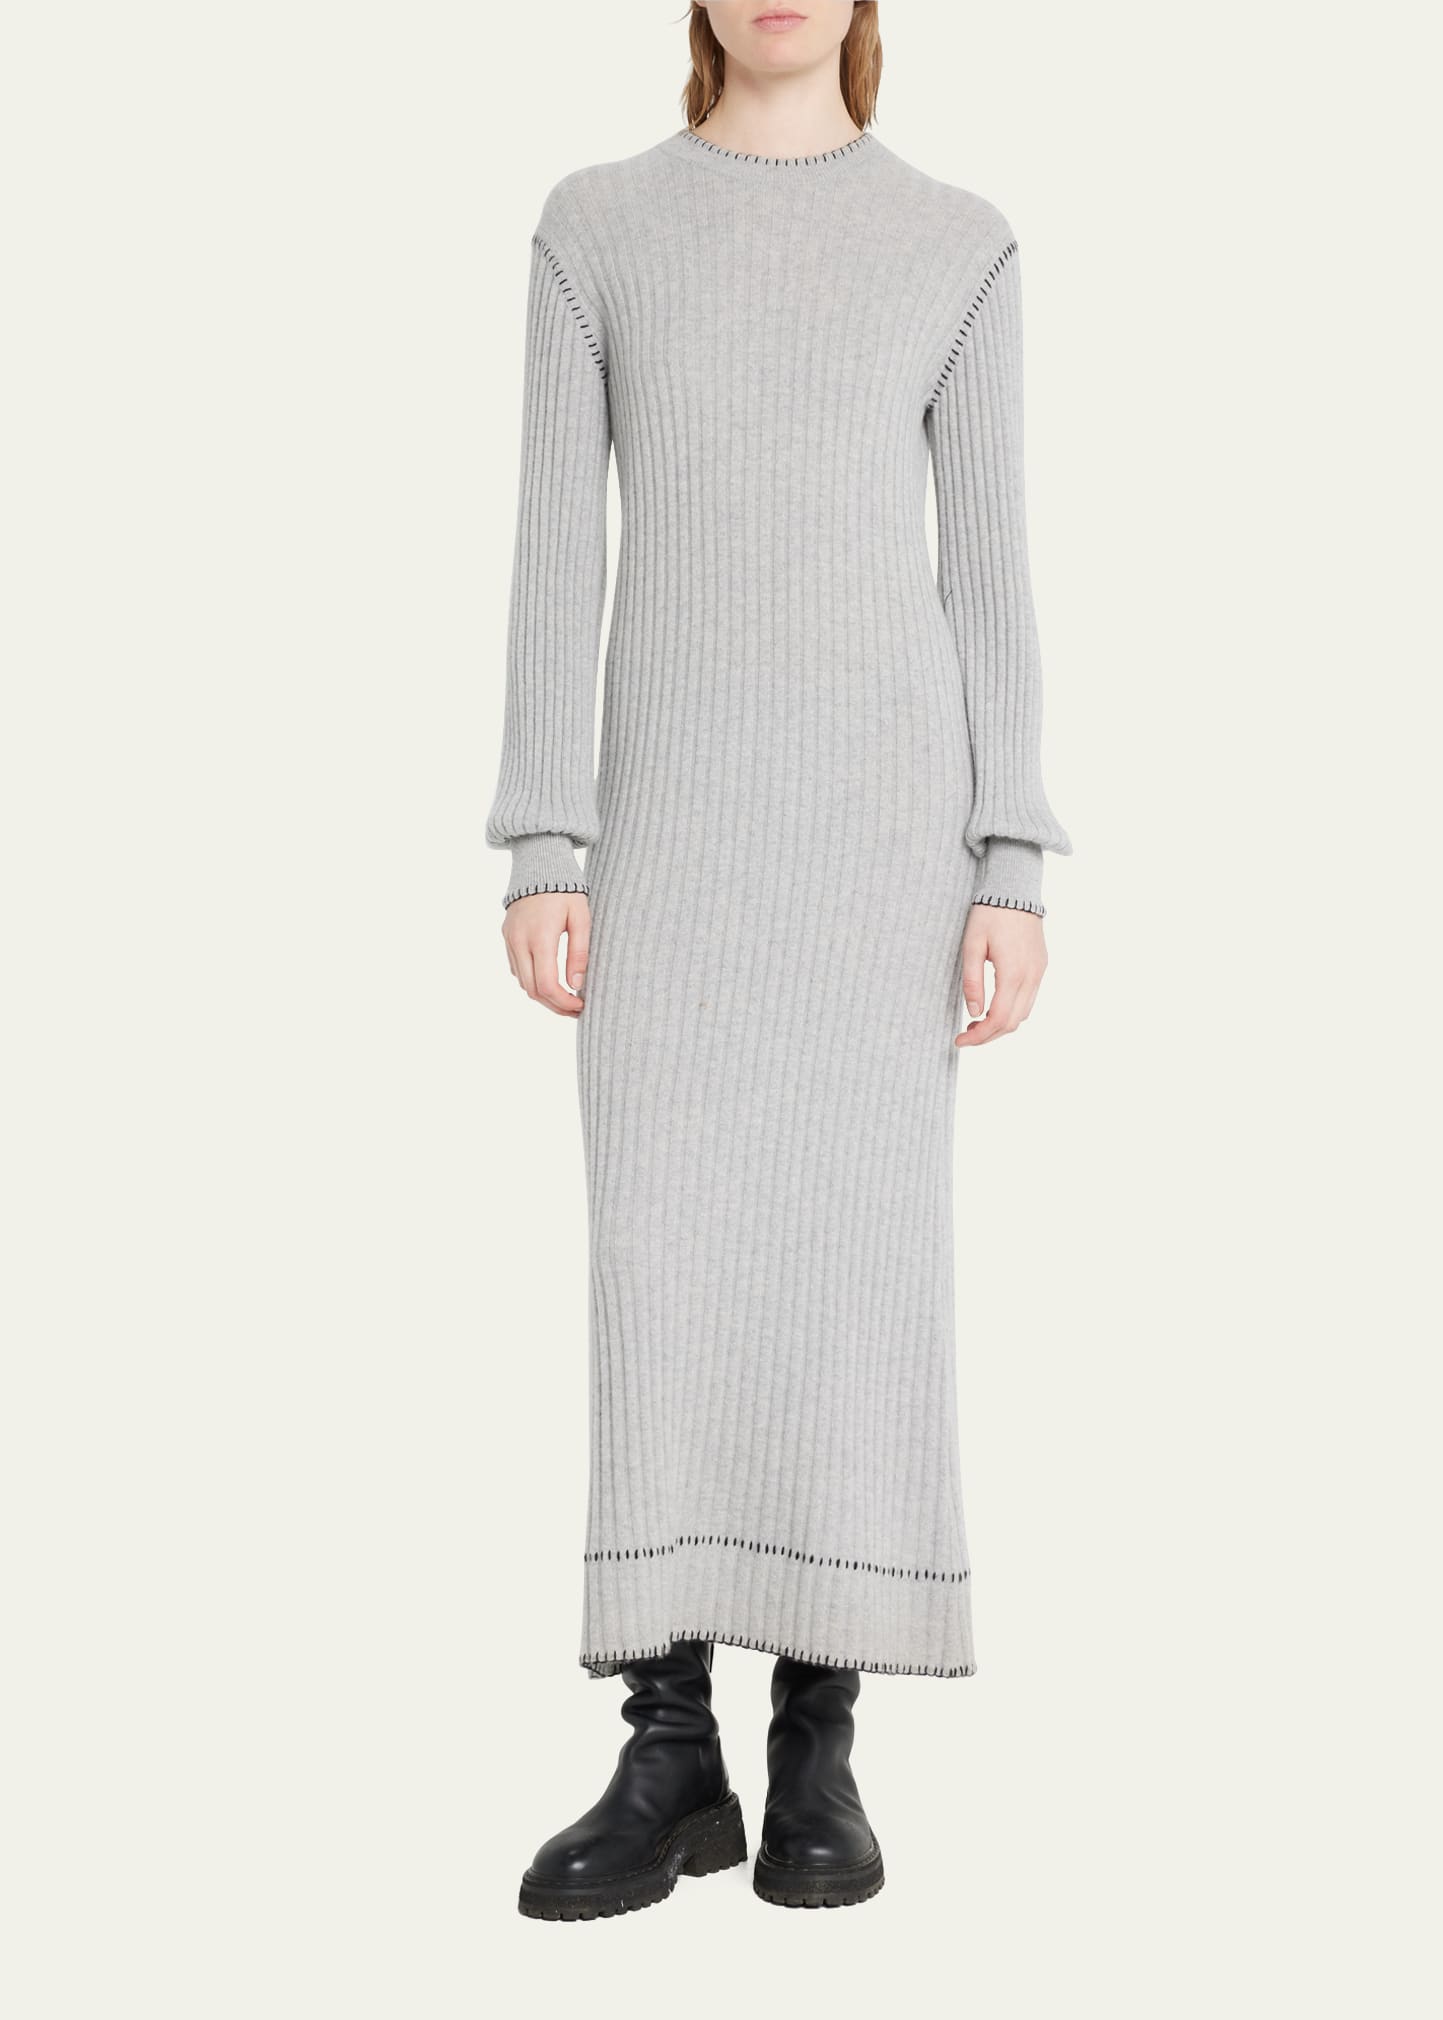 speelgoed Ingang Strak Lisa Yang The Nette Cashmere Rib Maxi Sweater Dress - Bergdorf Goodman